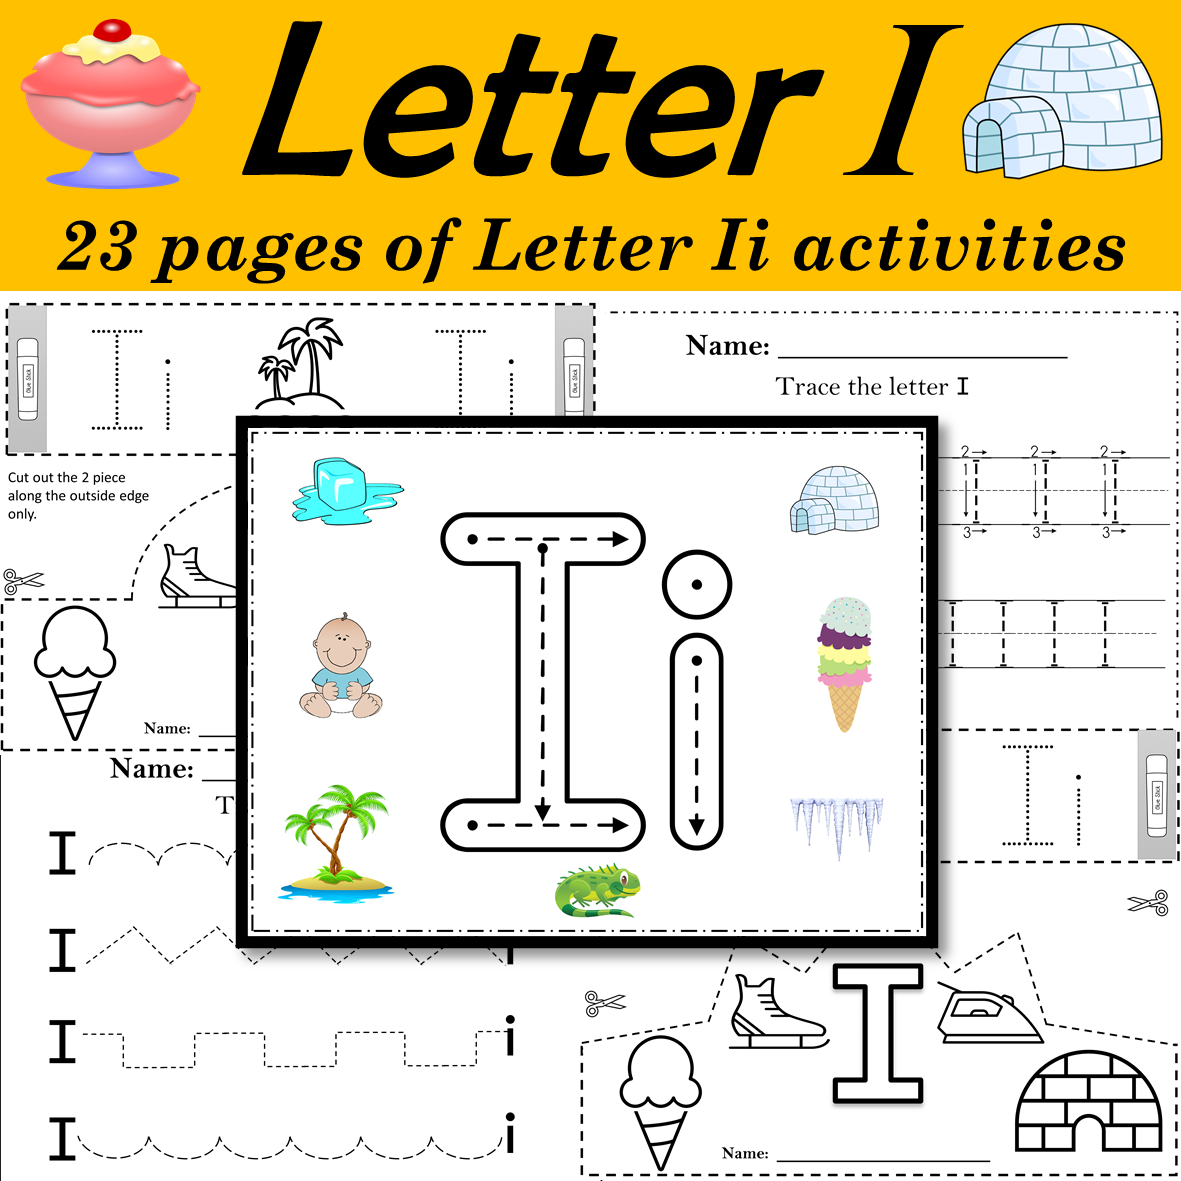 Letter of the week: LETTER I-NO PREP WORKSHEETS- LETTER I Alphabet Lore  theme